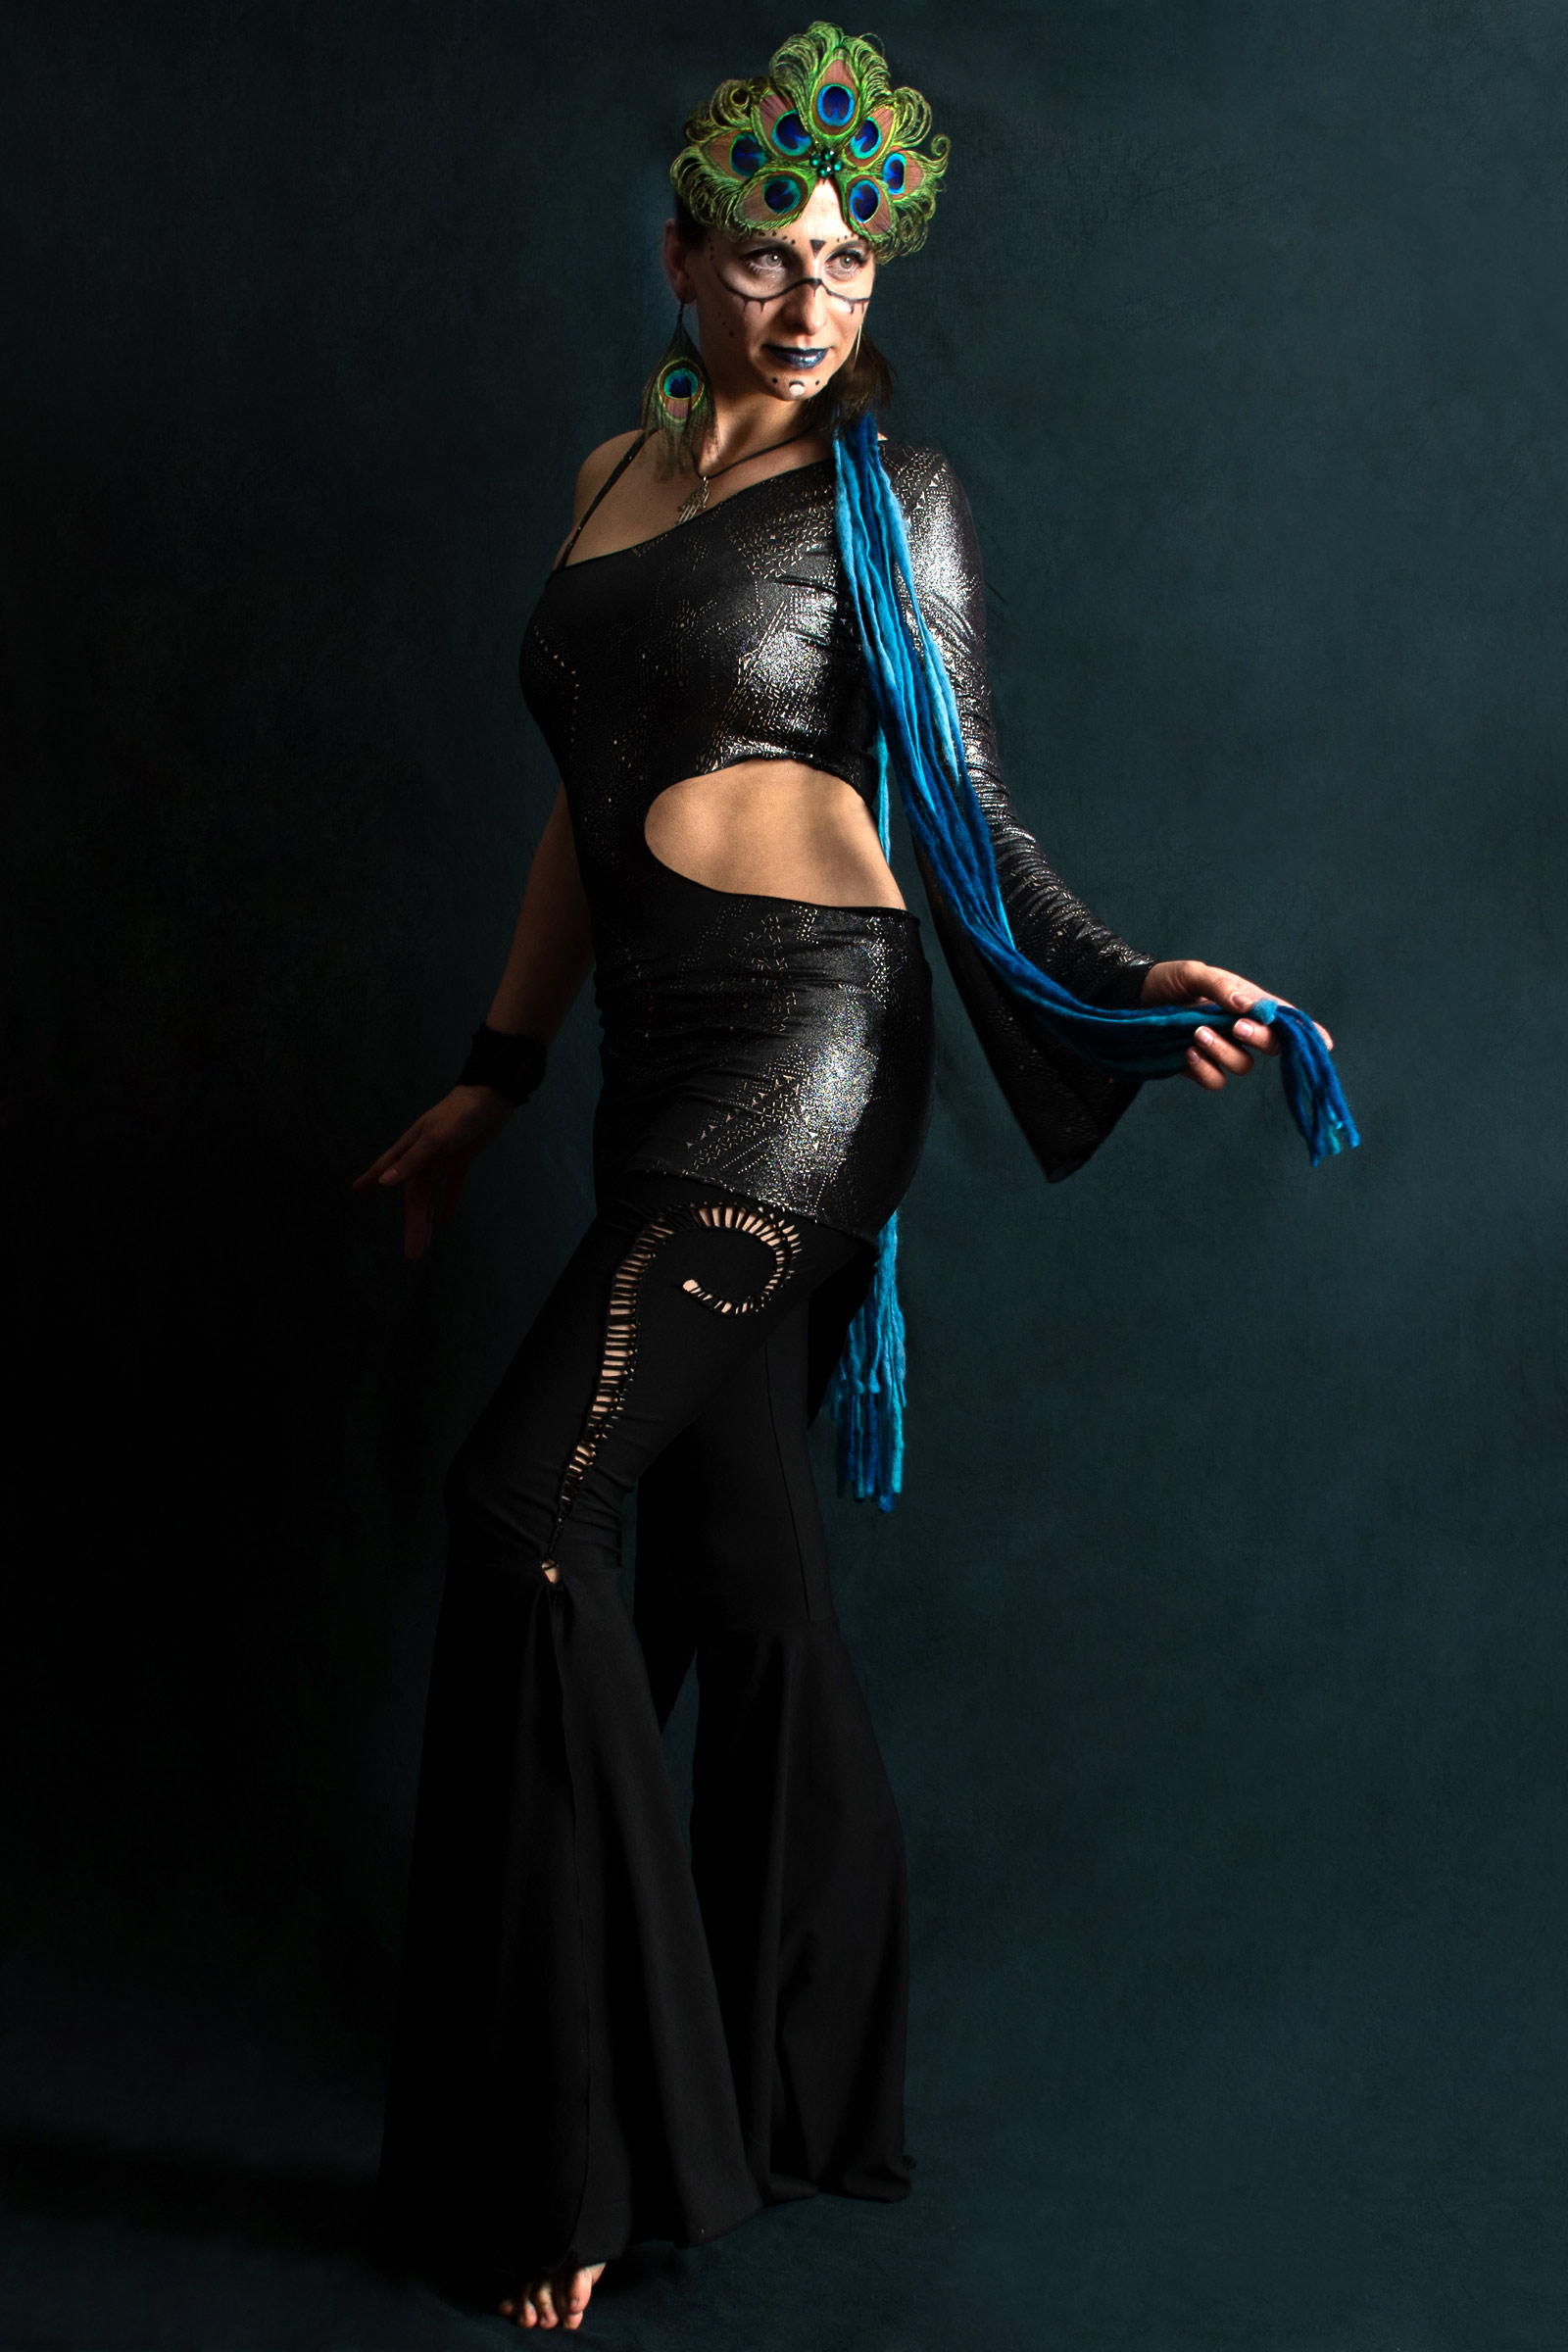 https://www.artemisyadancewear.com/wp-content/uploads/2020/05/tribal-fusion-dreadlocks-tribal-belly-dance-accessories-ats-accessories-post-apocalyptic-outfit-dreadlocks-performance-dancers-accessories-coraline-artemisya-dancewear-1.jpg